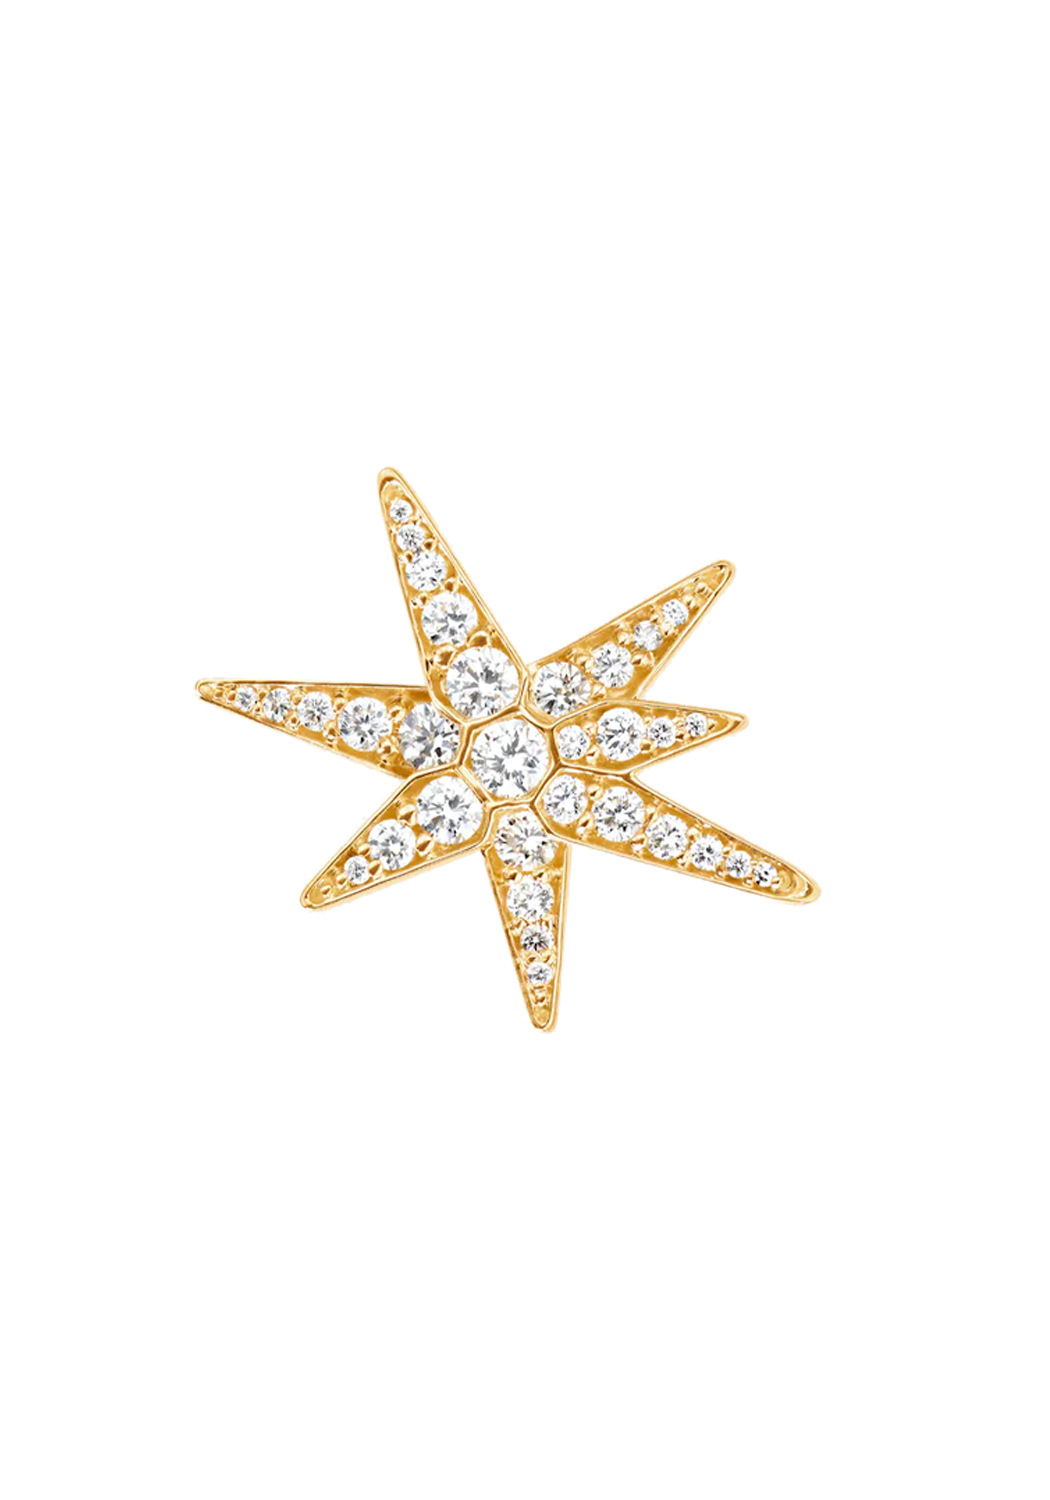 Ole Lynggaard 18KYG Medium Funky Stars Diamond Earrings | Ref. 3098-401-L | OsterJewelers.com